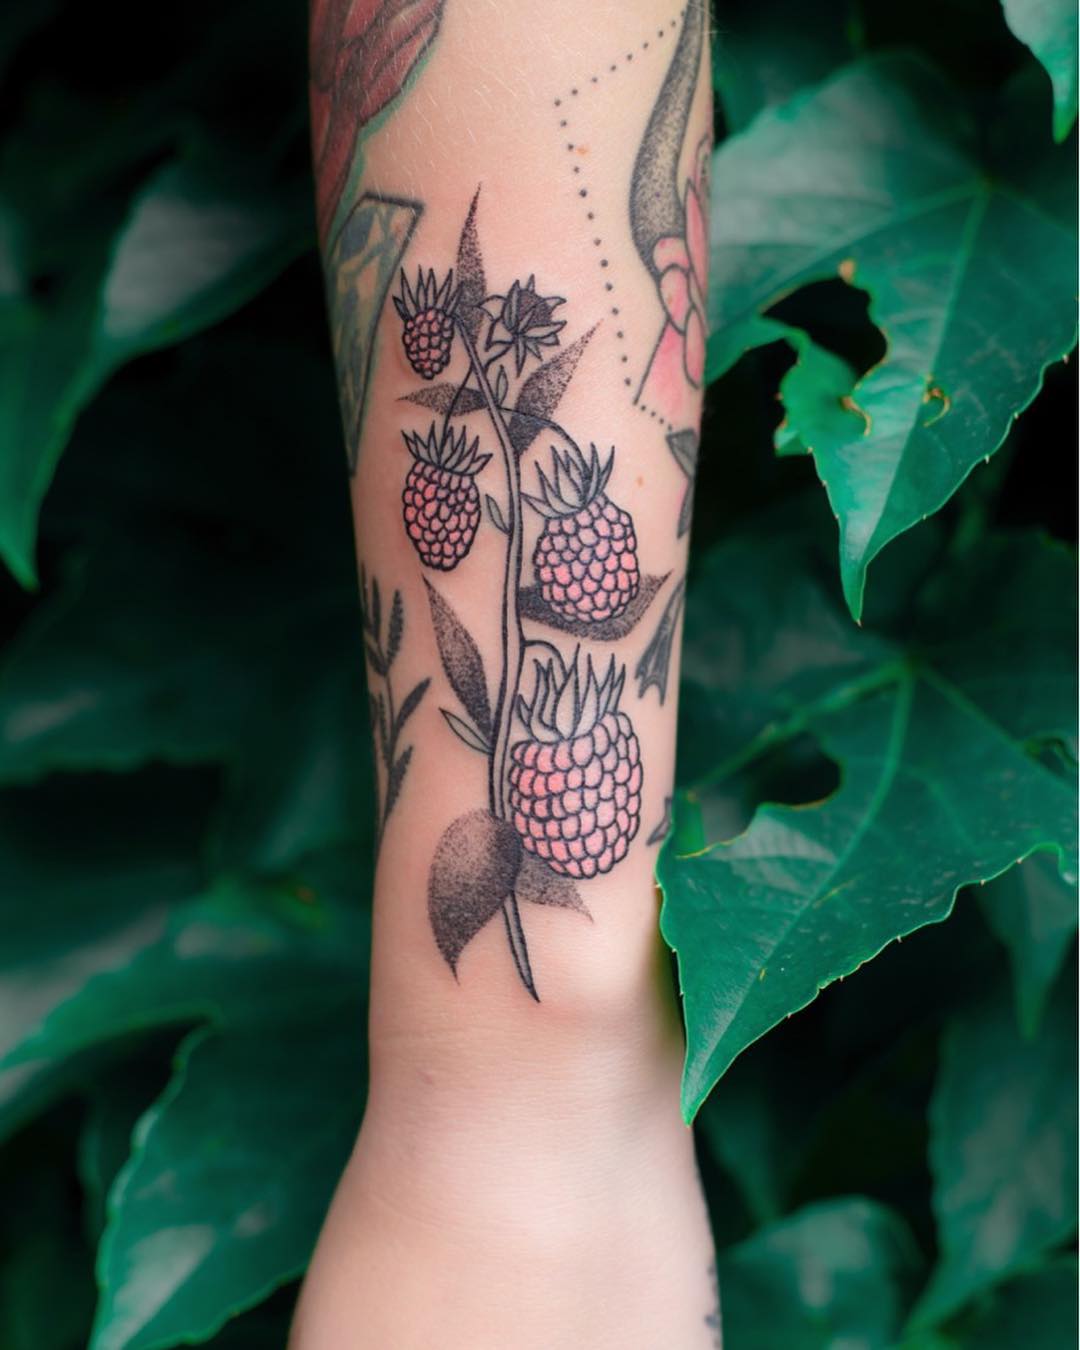 Raspberry branch tattoo by Dżudi Bazgrole